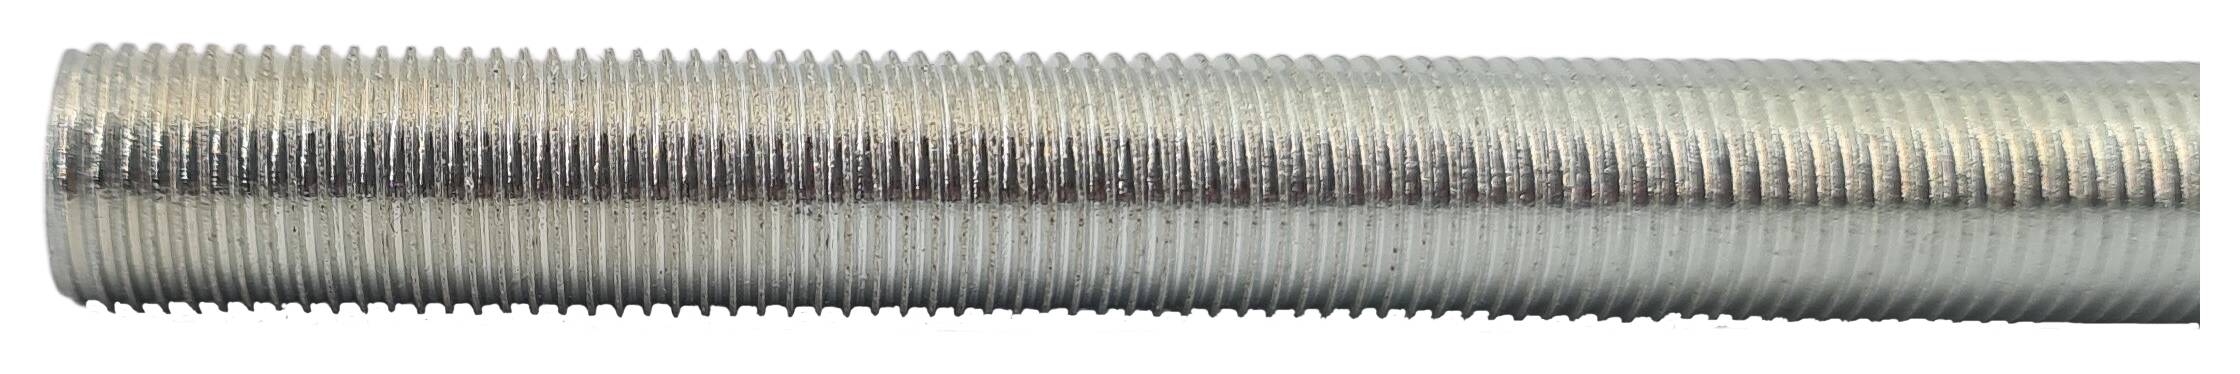 iron thread tube M10x1x285 round zinc